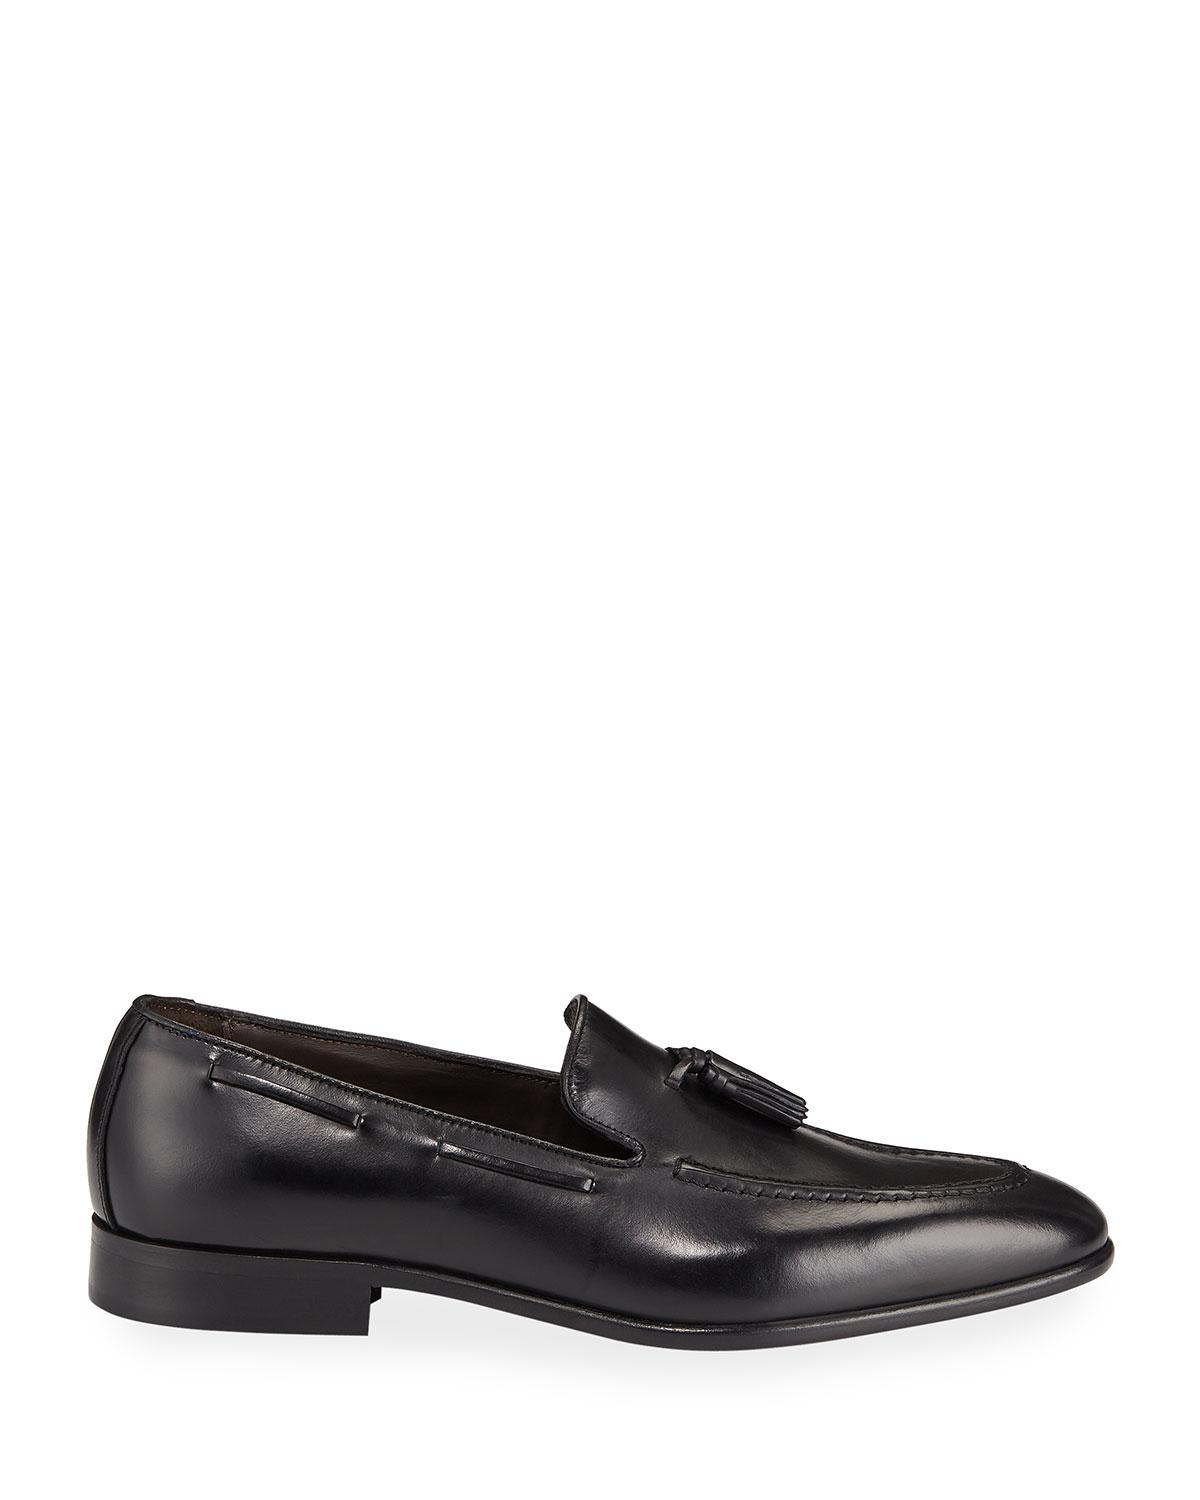 Bruno Magli Men's Doc Leather Tassel Loafers in Black for Men - Lyst